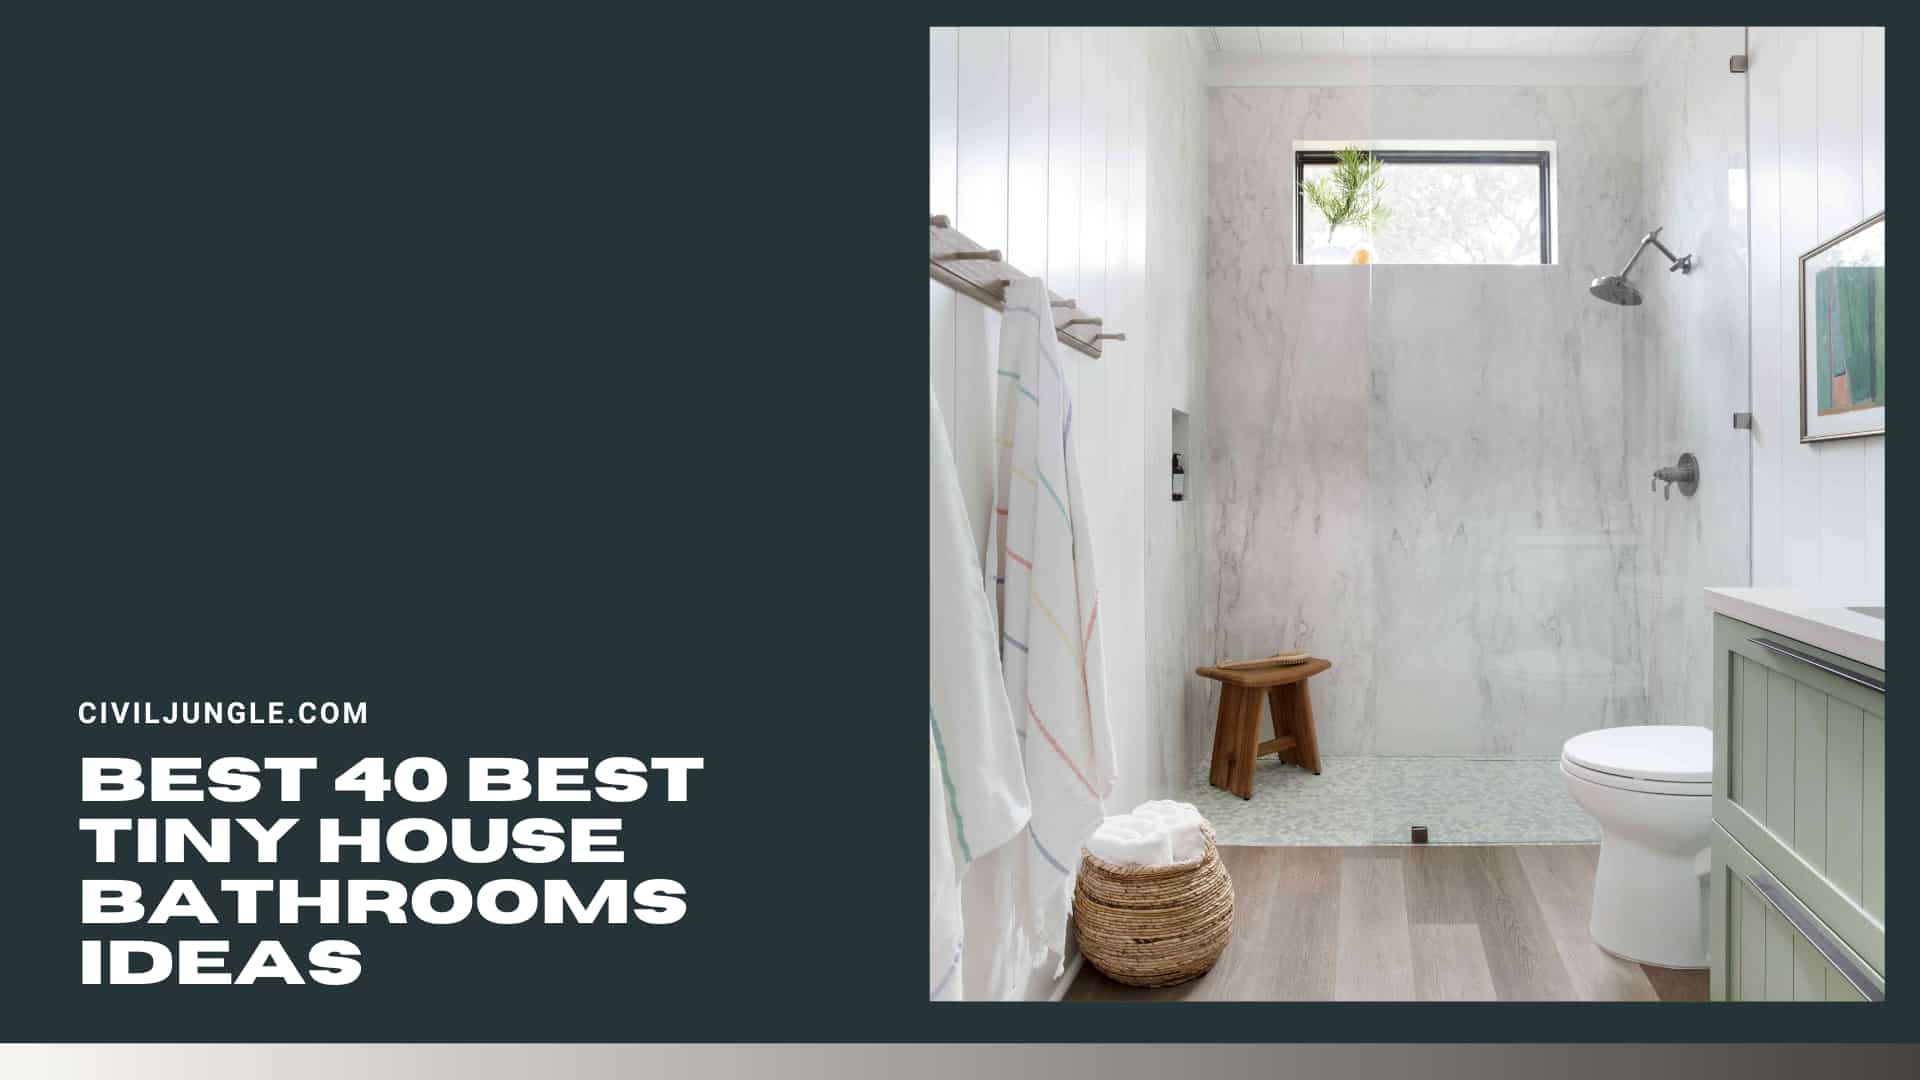 Best 40 Best Tiny House Bathrooms ideas